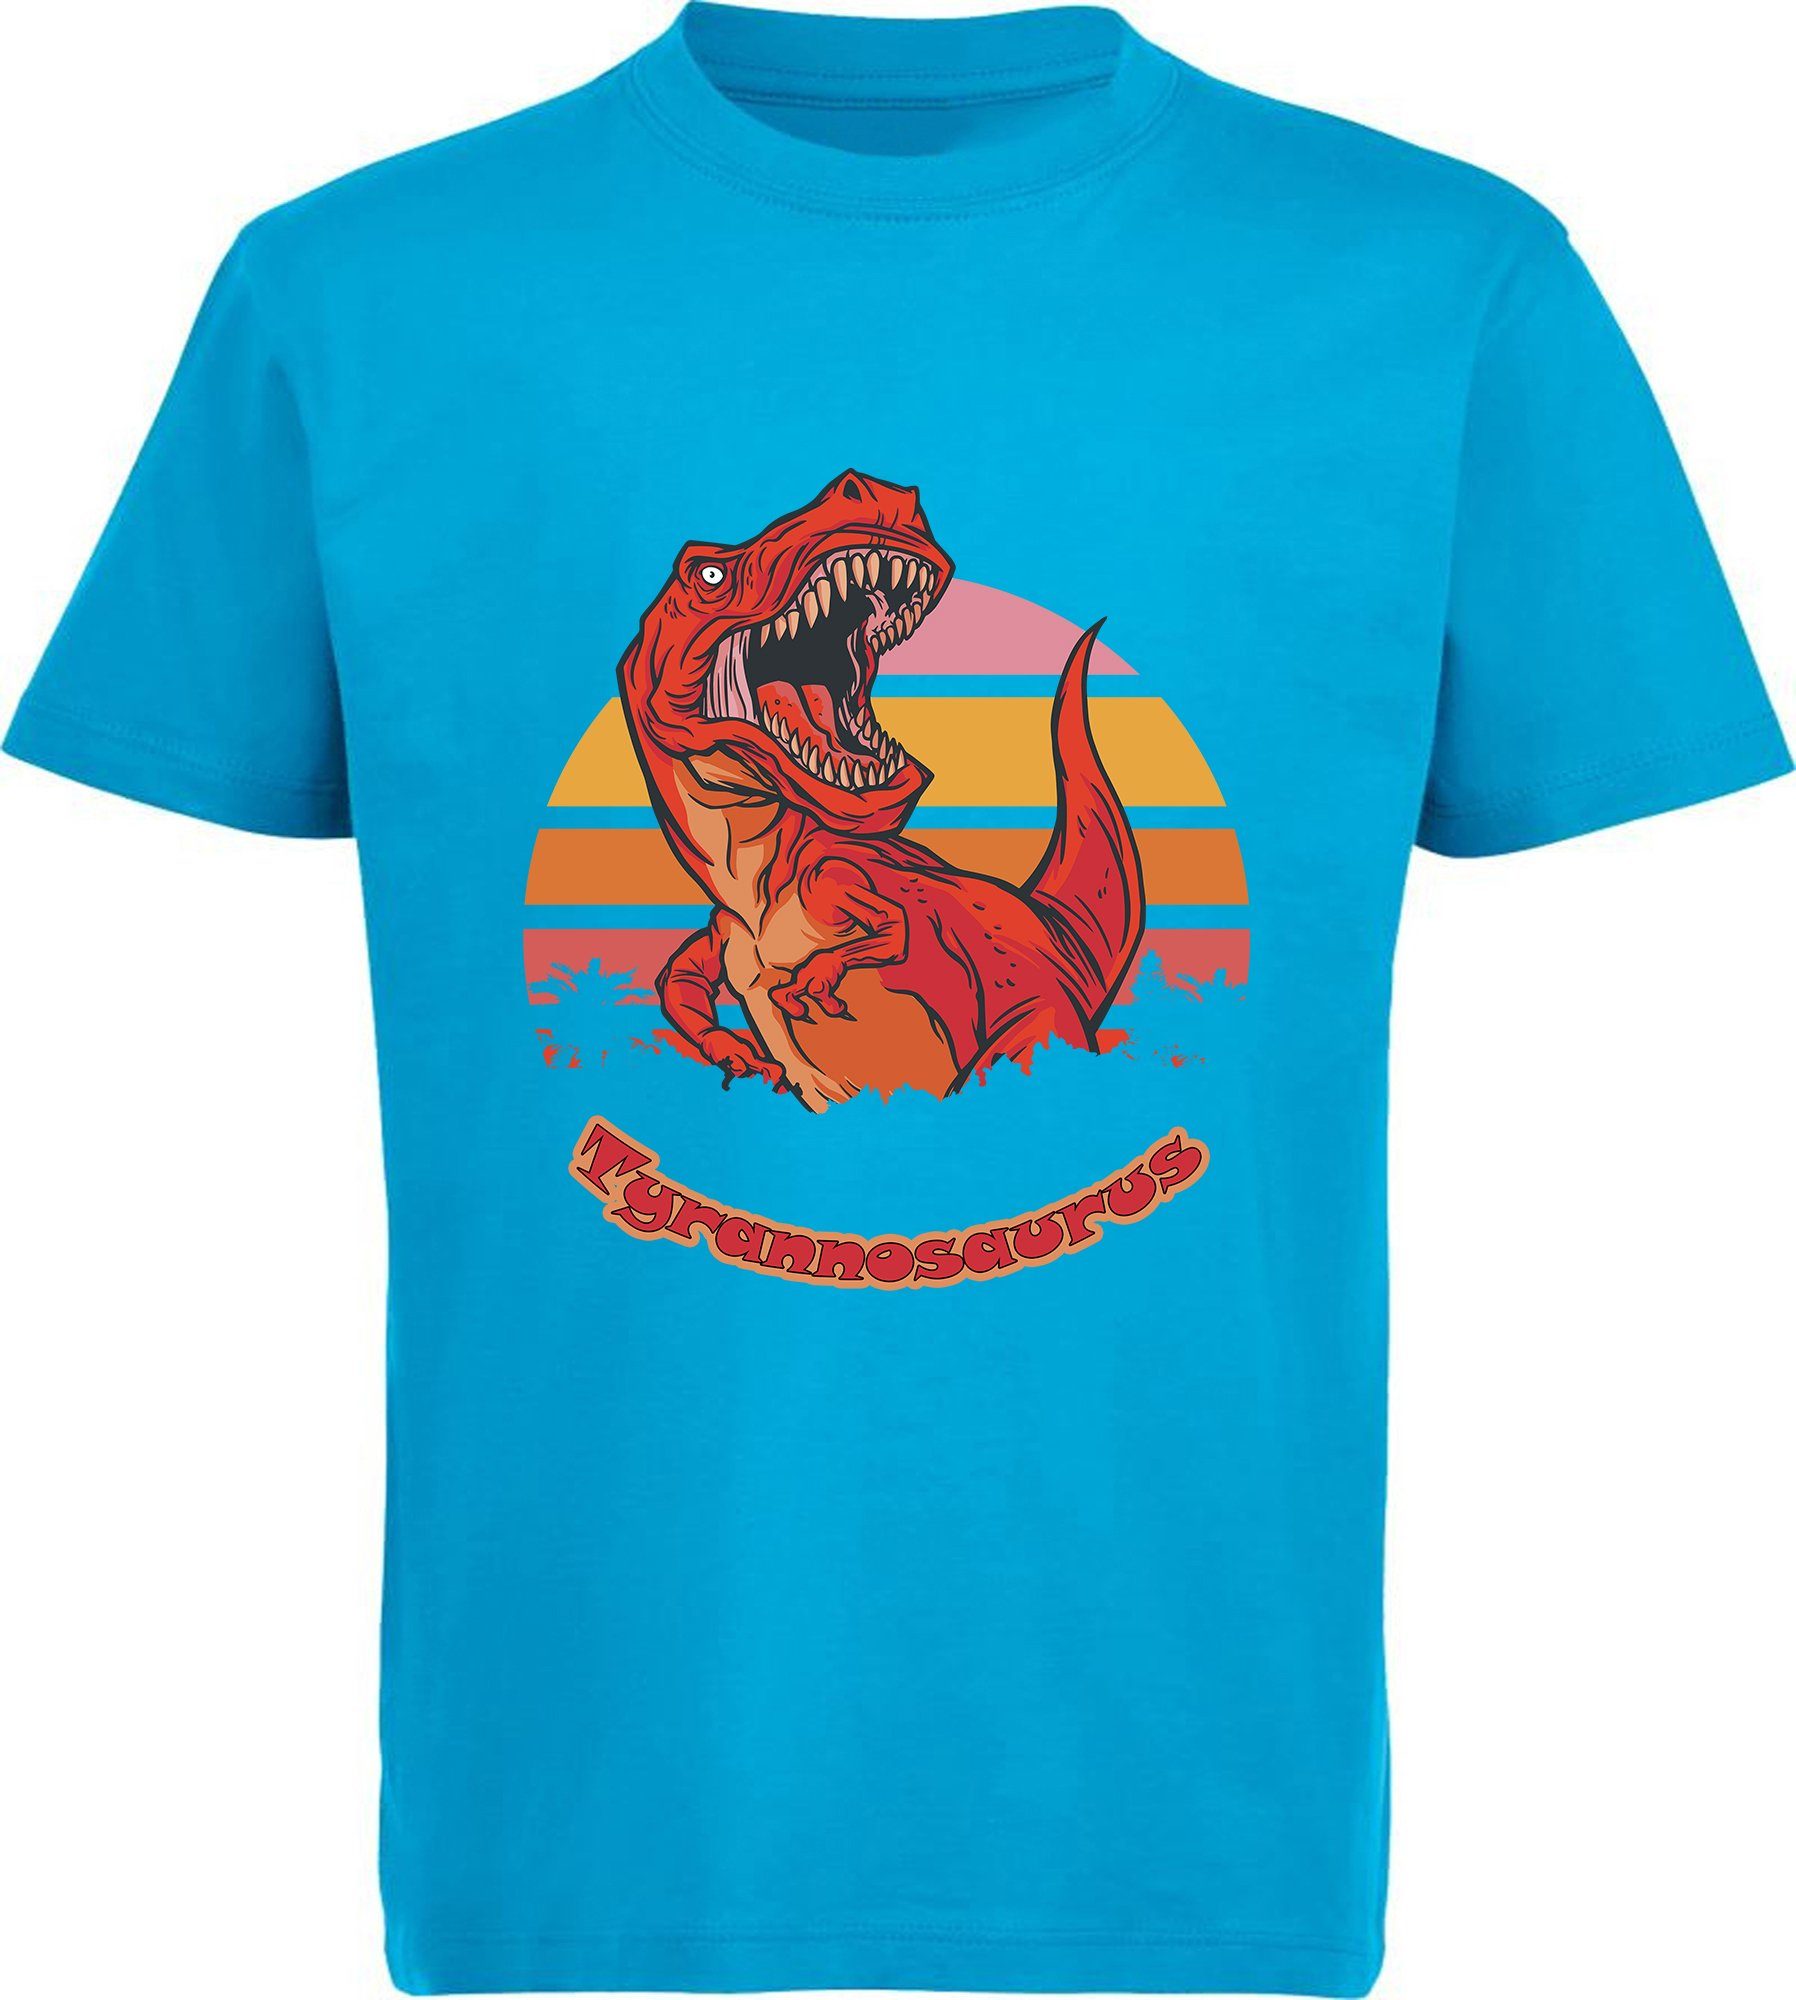 MyDesign24 Print-Shirt bedrucktes Kinder T-Shirt mit roten brüllendem T-Rex Baumwollshirt mit Dino, schwarz, weiß, rot, blau, i100 aqua blau | T-Shirts